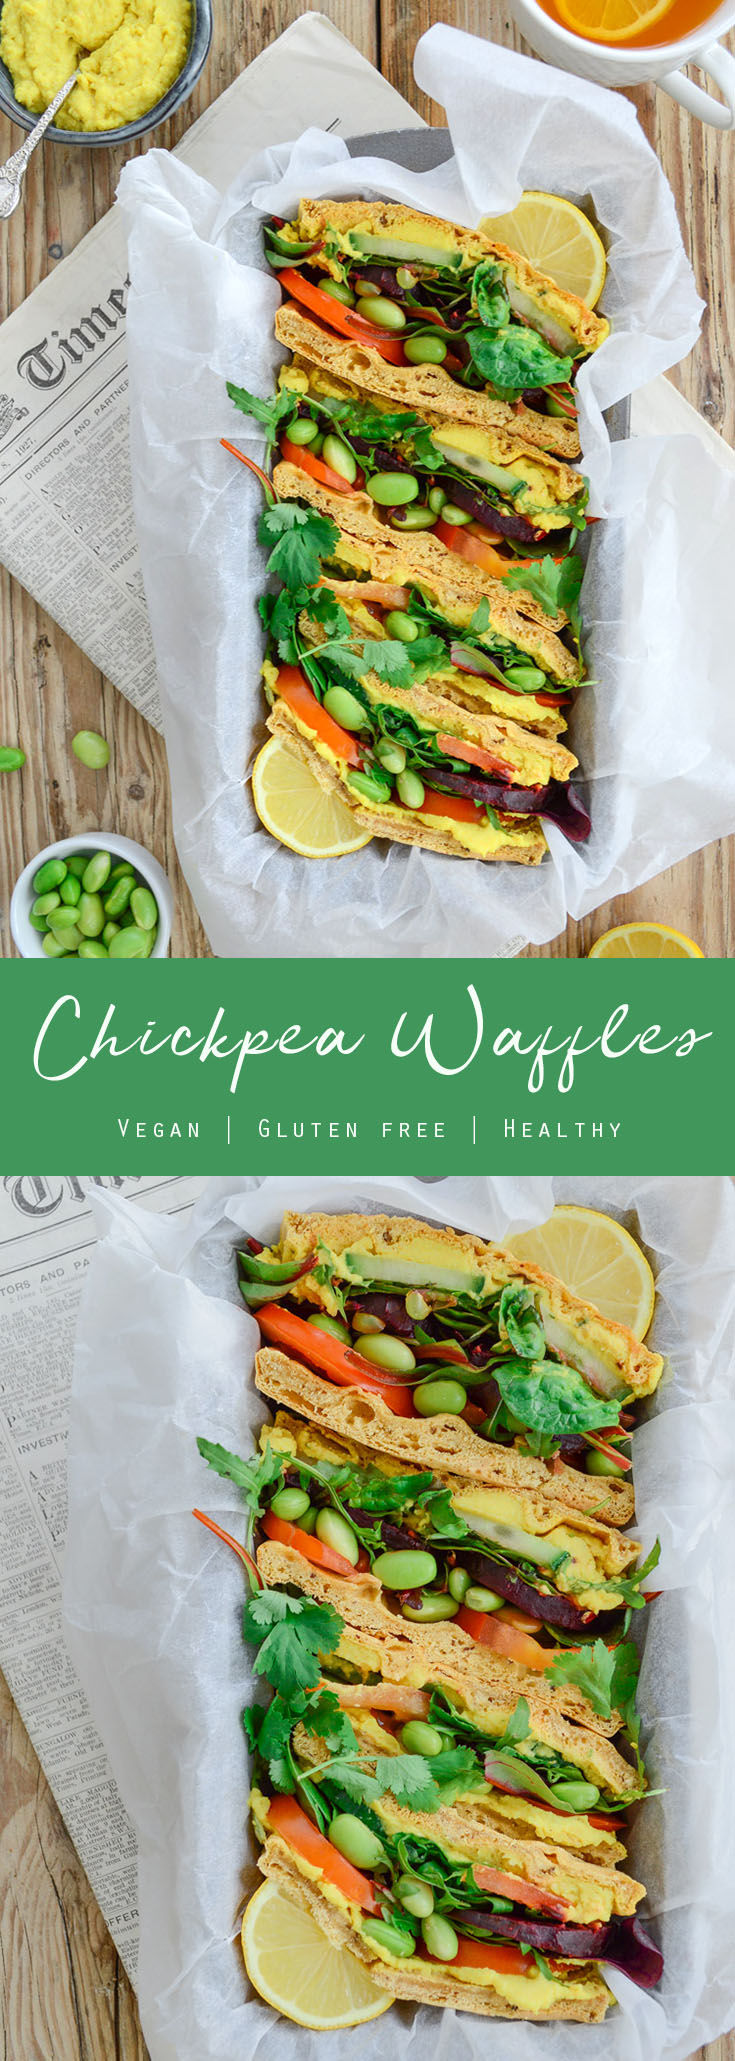 Vegan & gluten free chickpea waffles #vegan #glutenfree #healthy #cleanrecipes